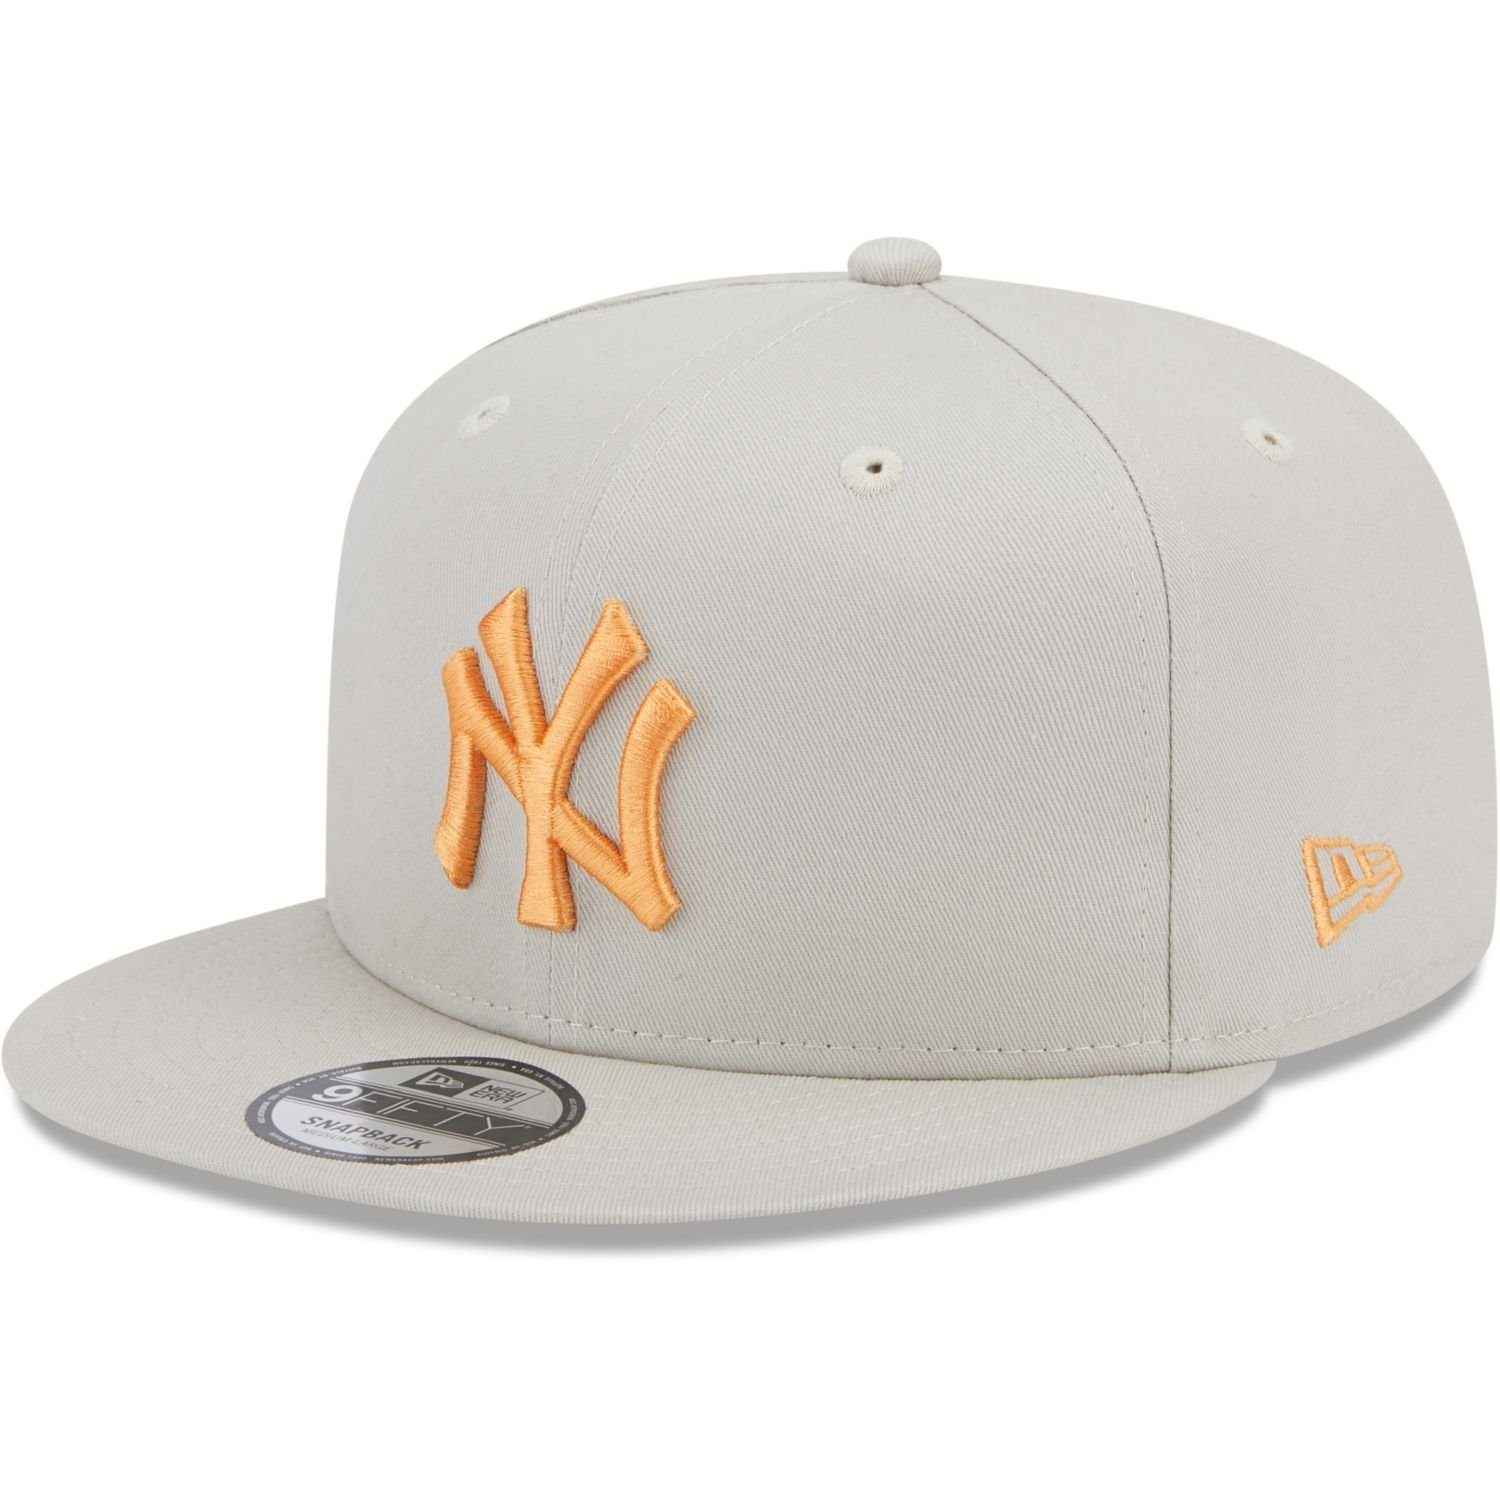 Cap 9Fifty Era New Yankees New York SIDEPATCH Snapback